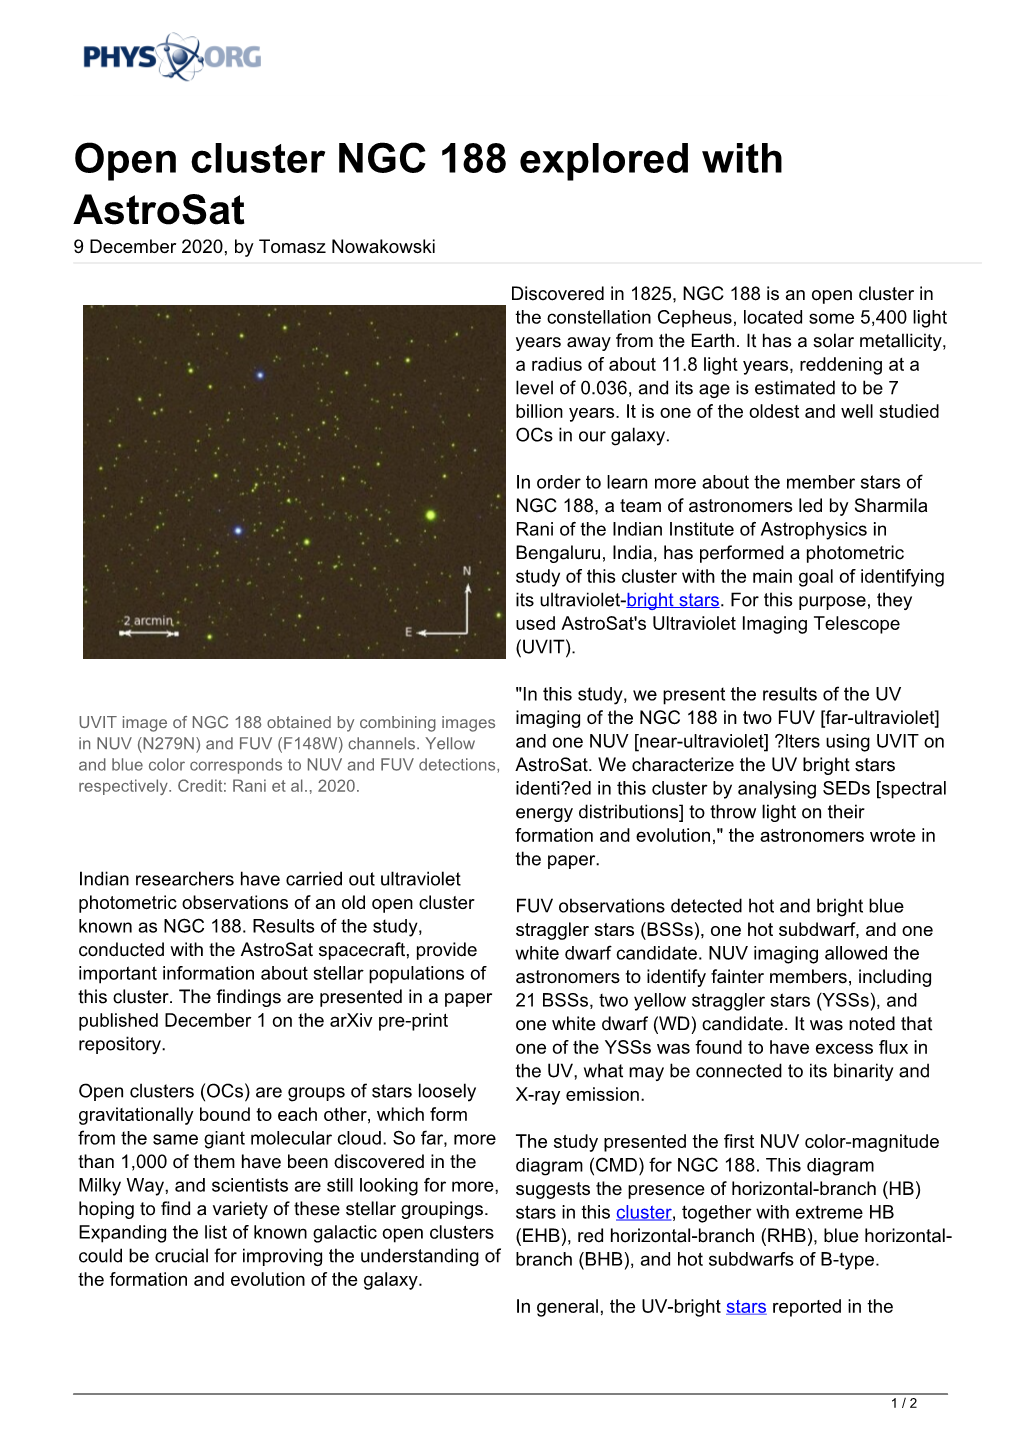 Open Cluster NGC 188 Explored with Astrosat 9 December 2020, by Tomasz Nowakowski